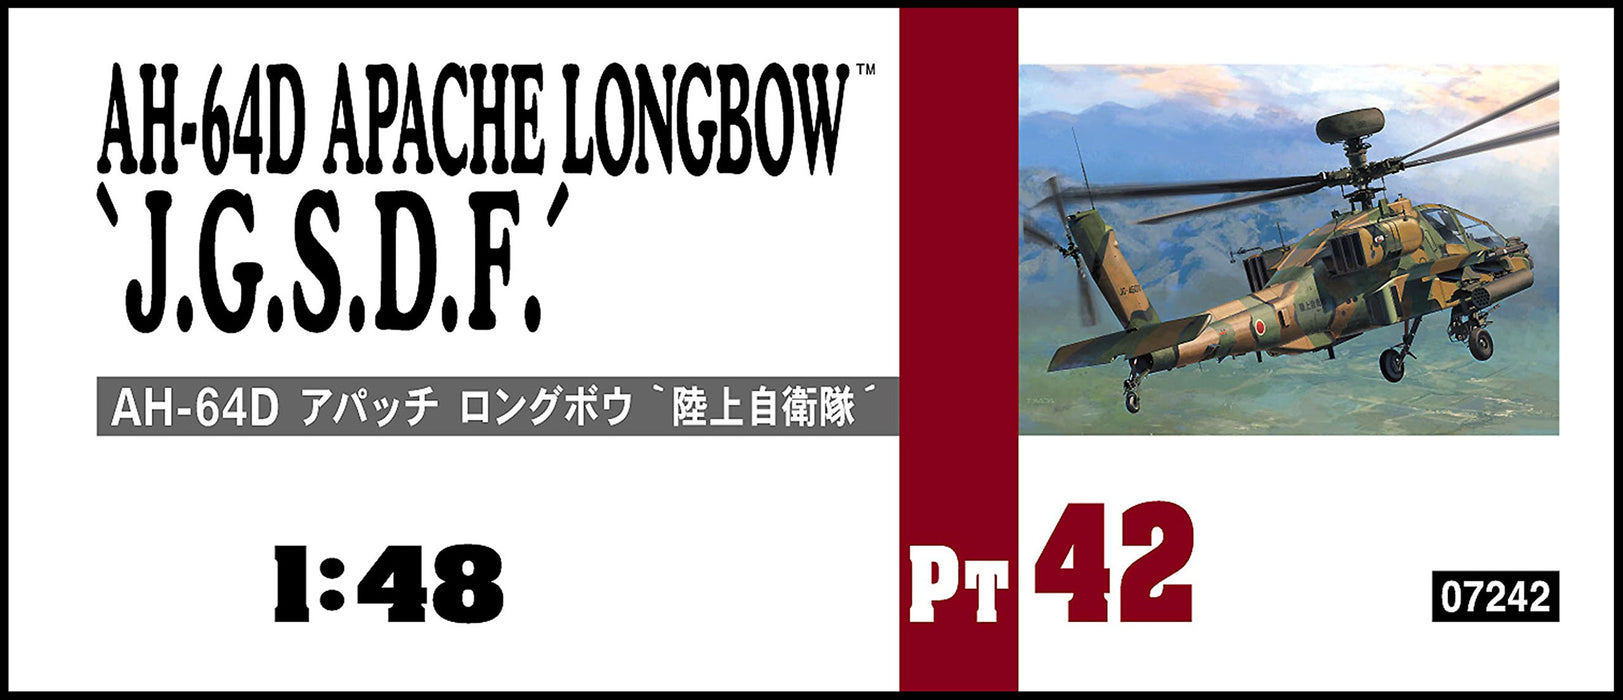 HASEGAWA 1/48 Ah-64D Apache Longbow JGSDF Modèle en plastique